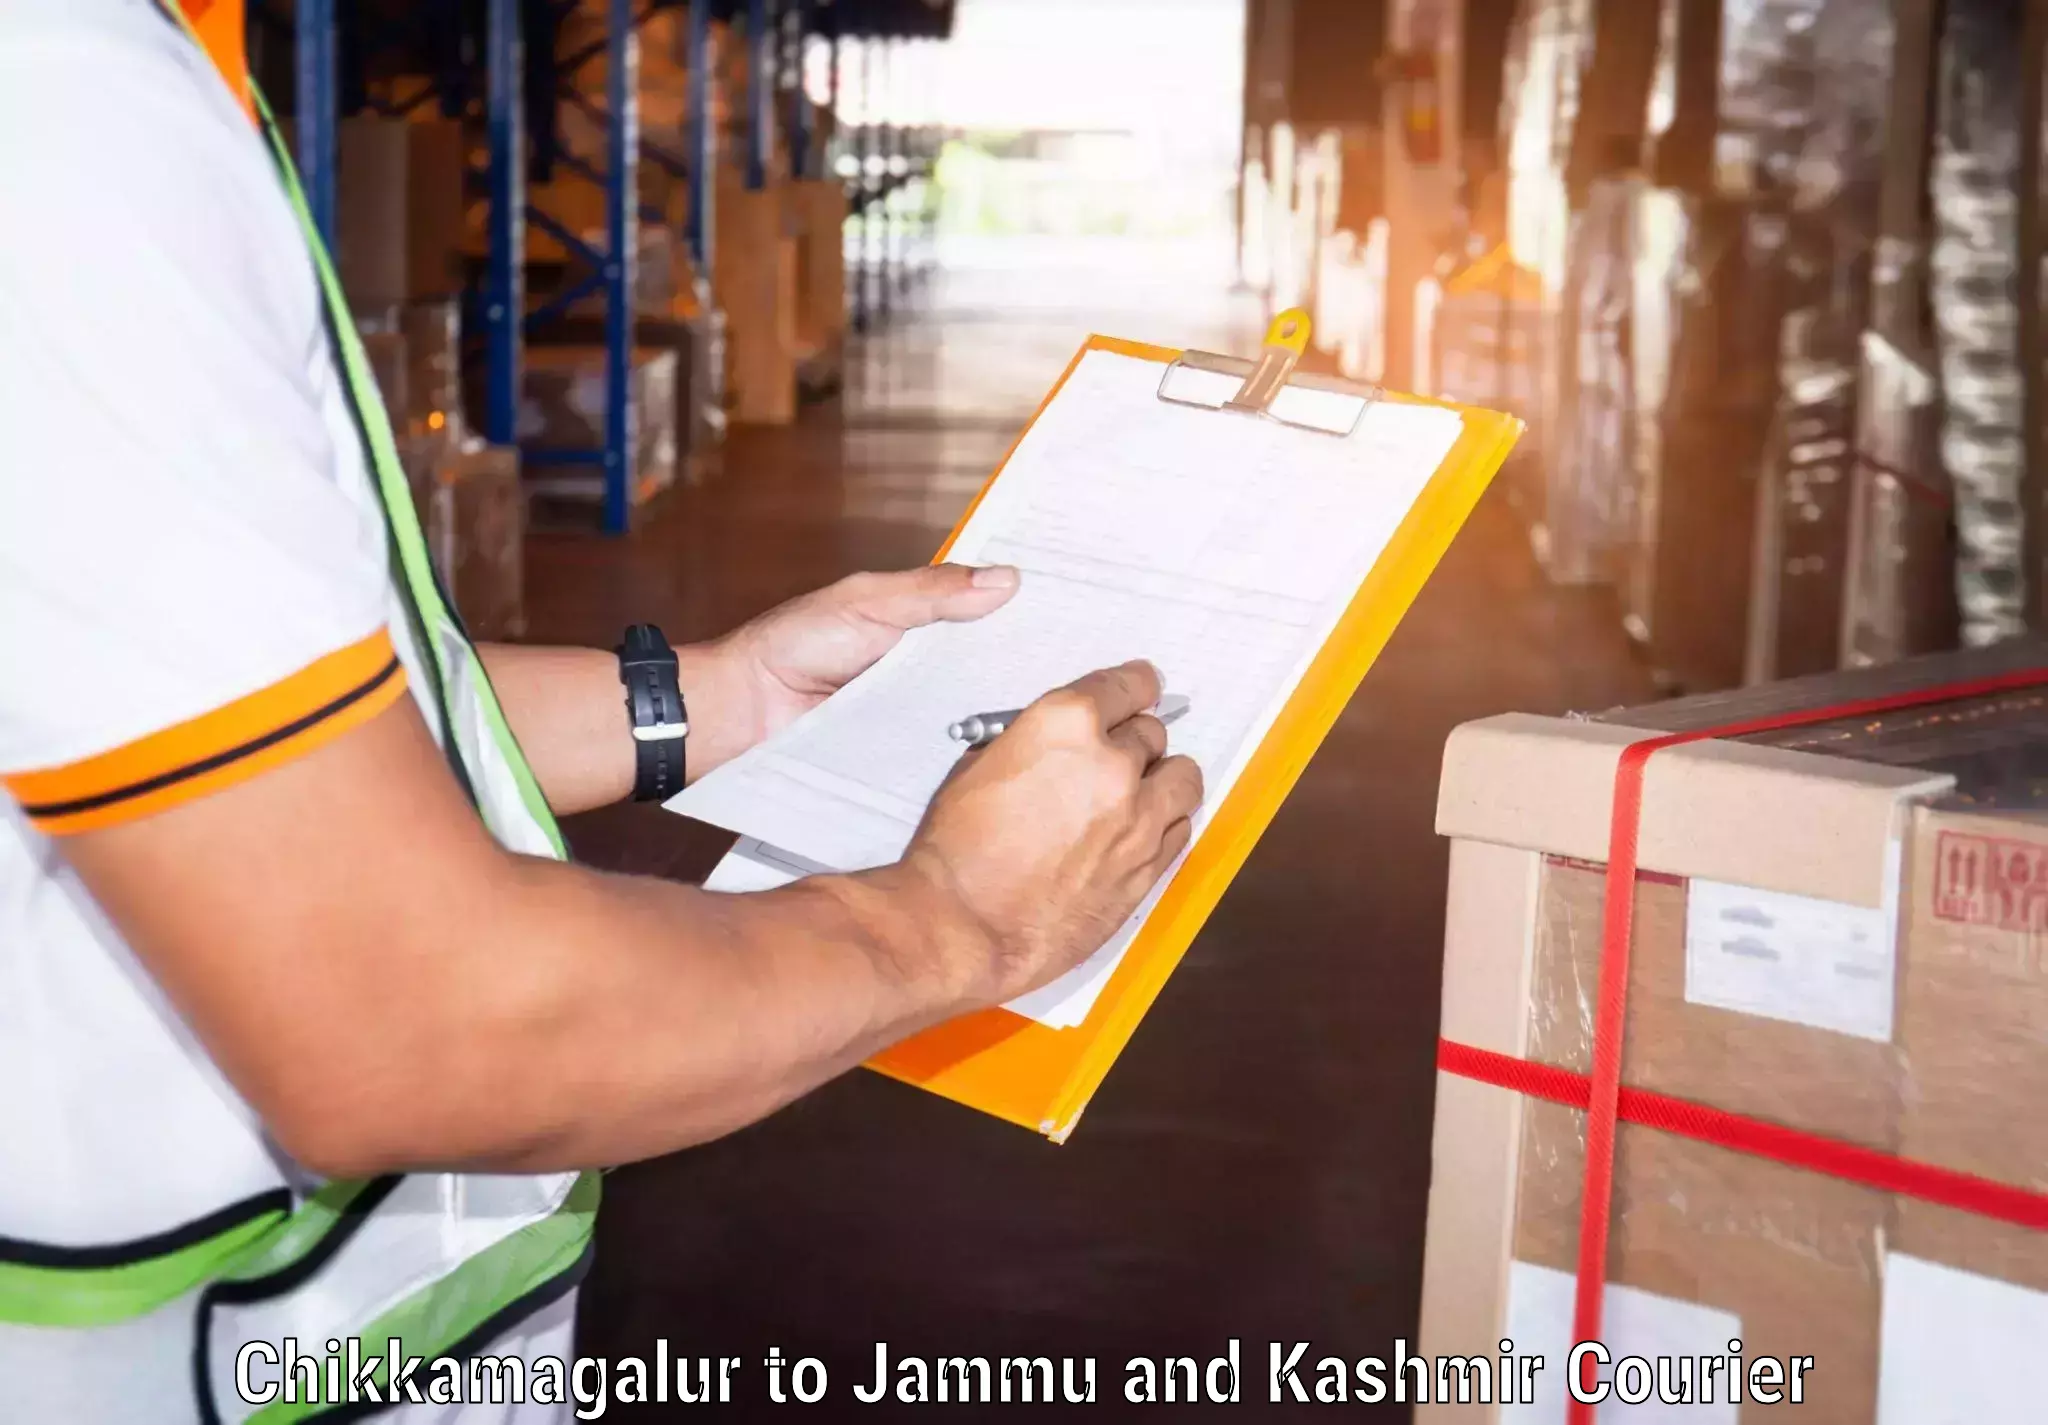 Efficient shipping operations Chikkamagalur to Srinagar Kashmir